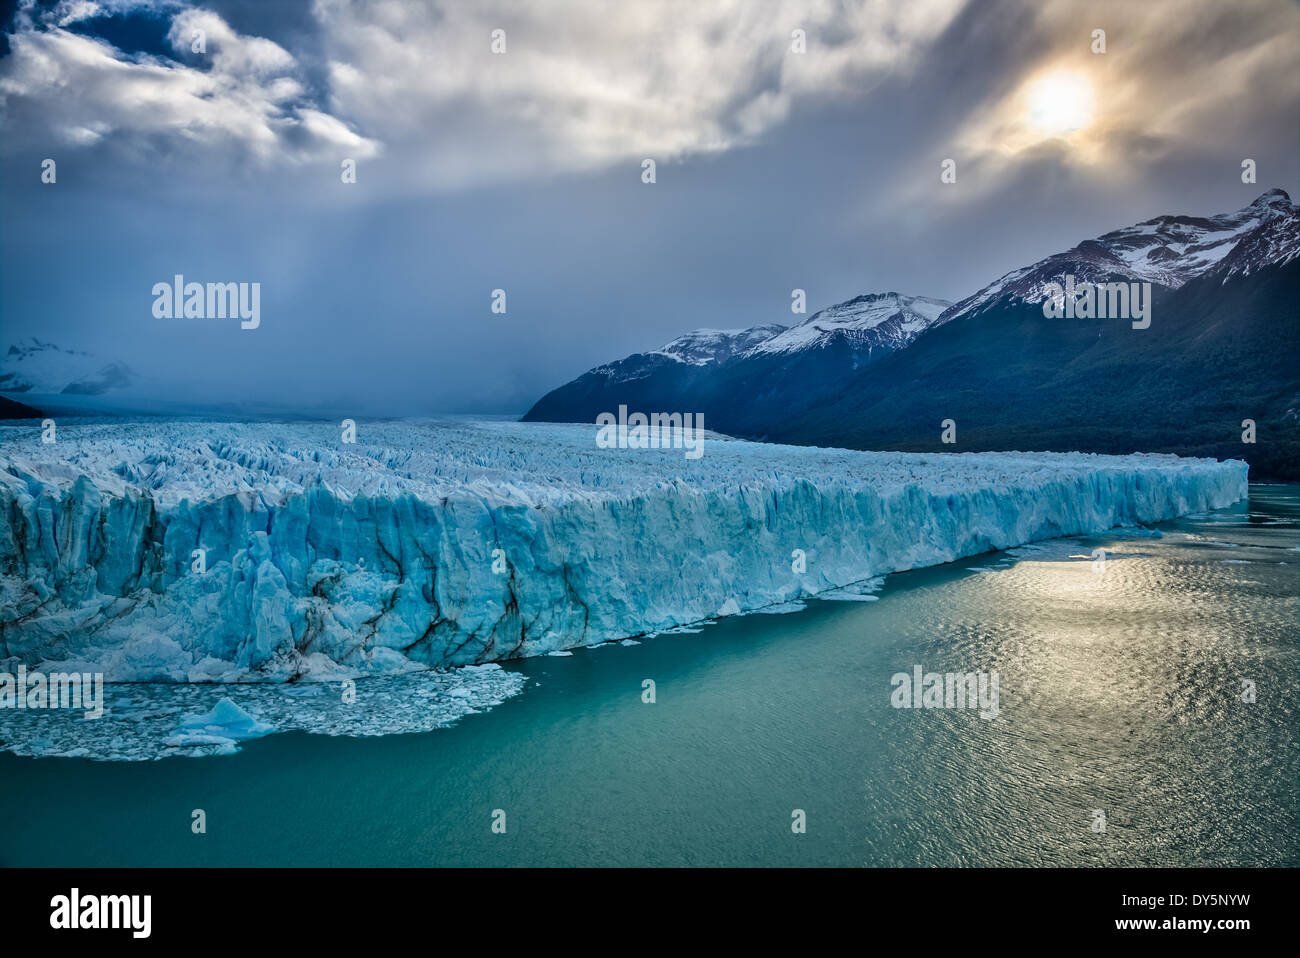 The Perito Moreno Glacier is a glacier located in the Los Glaciares National Park in southwest Santa Cruz province, Argentina. Stock Photo